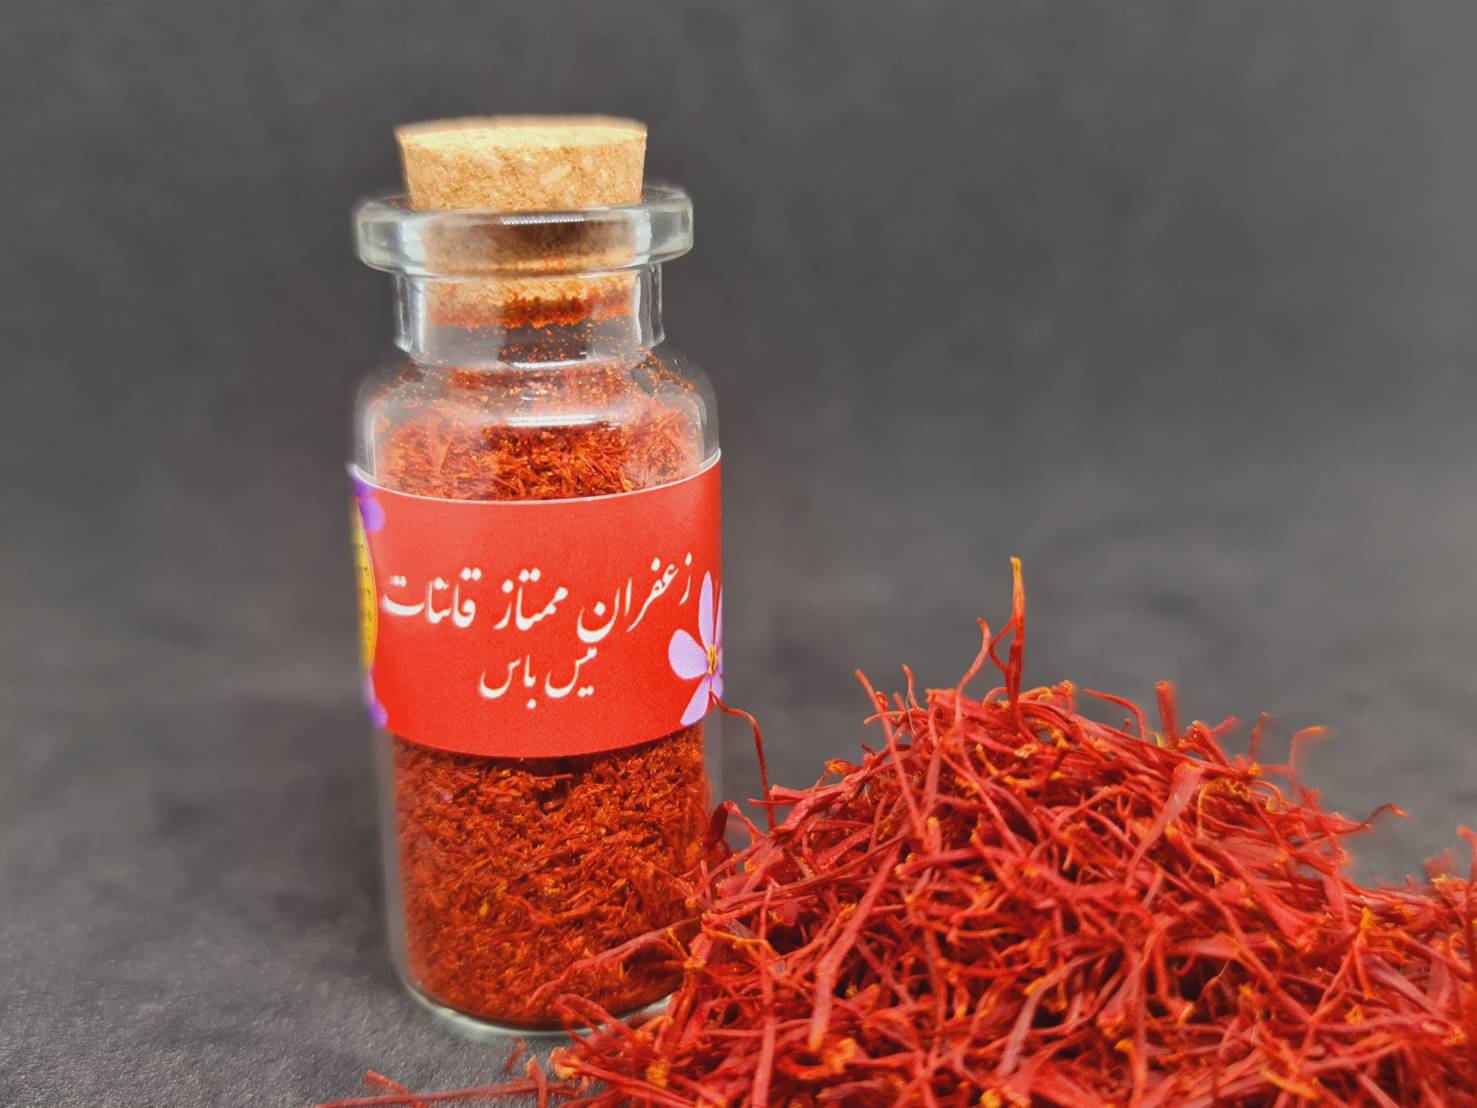 Saffron powder 2 กรัม (2g) แซฟฟรอน หญ้าฝรั่น อิหร่าน บริสุทธิ์ 100% Iranian saffron powder 2 grams MISSBOSS 100% Pure